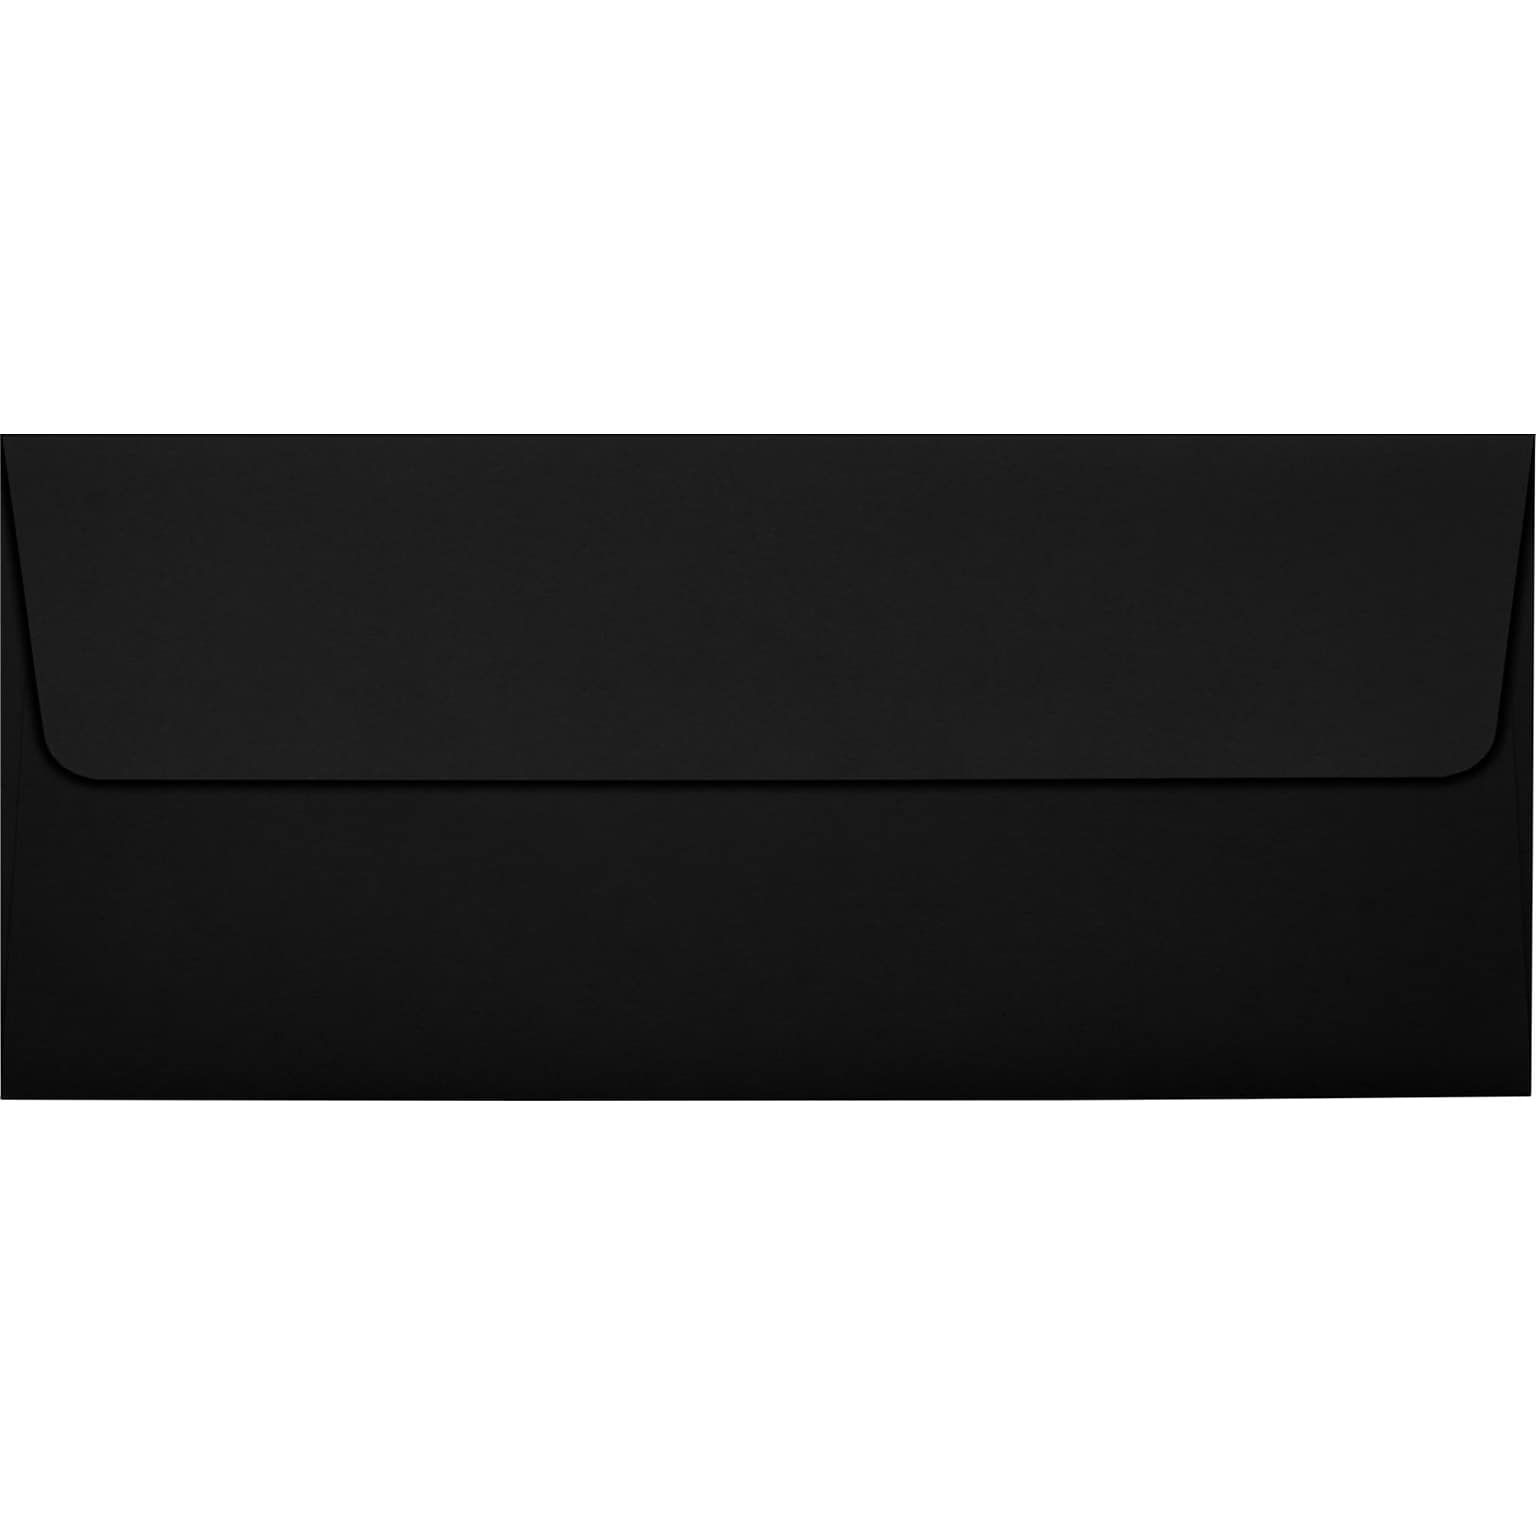 LUX 80lbs. 4 1/8 x 9 1/2 #10 Square Flap Envelopes, Midnight Black, 1000/BX